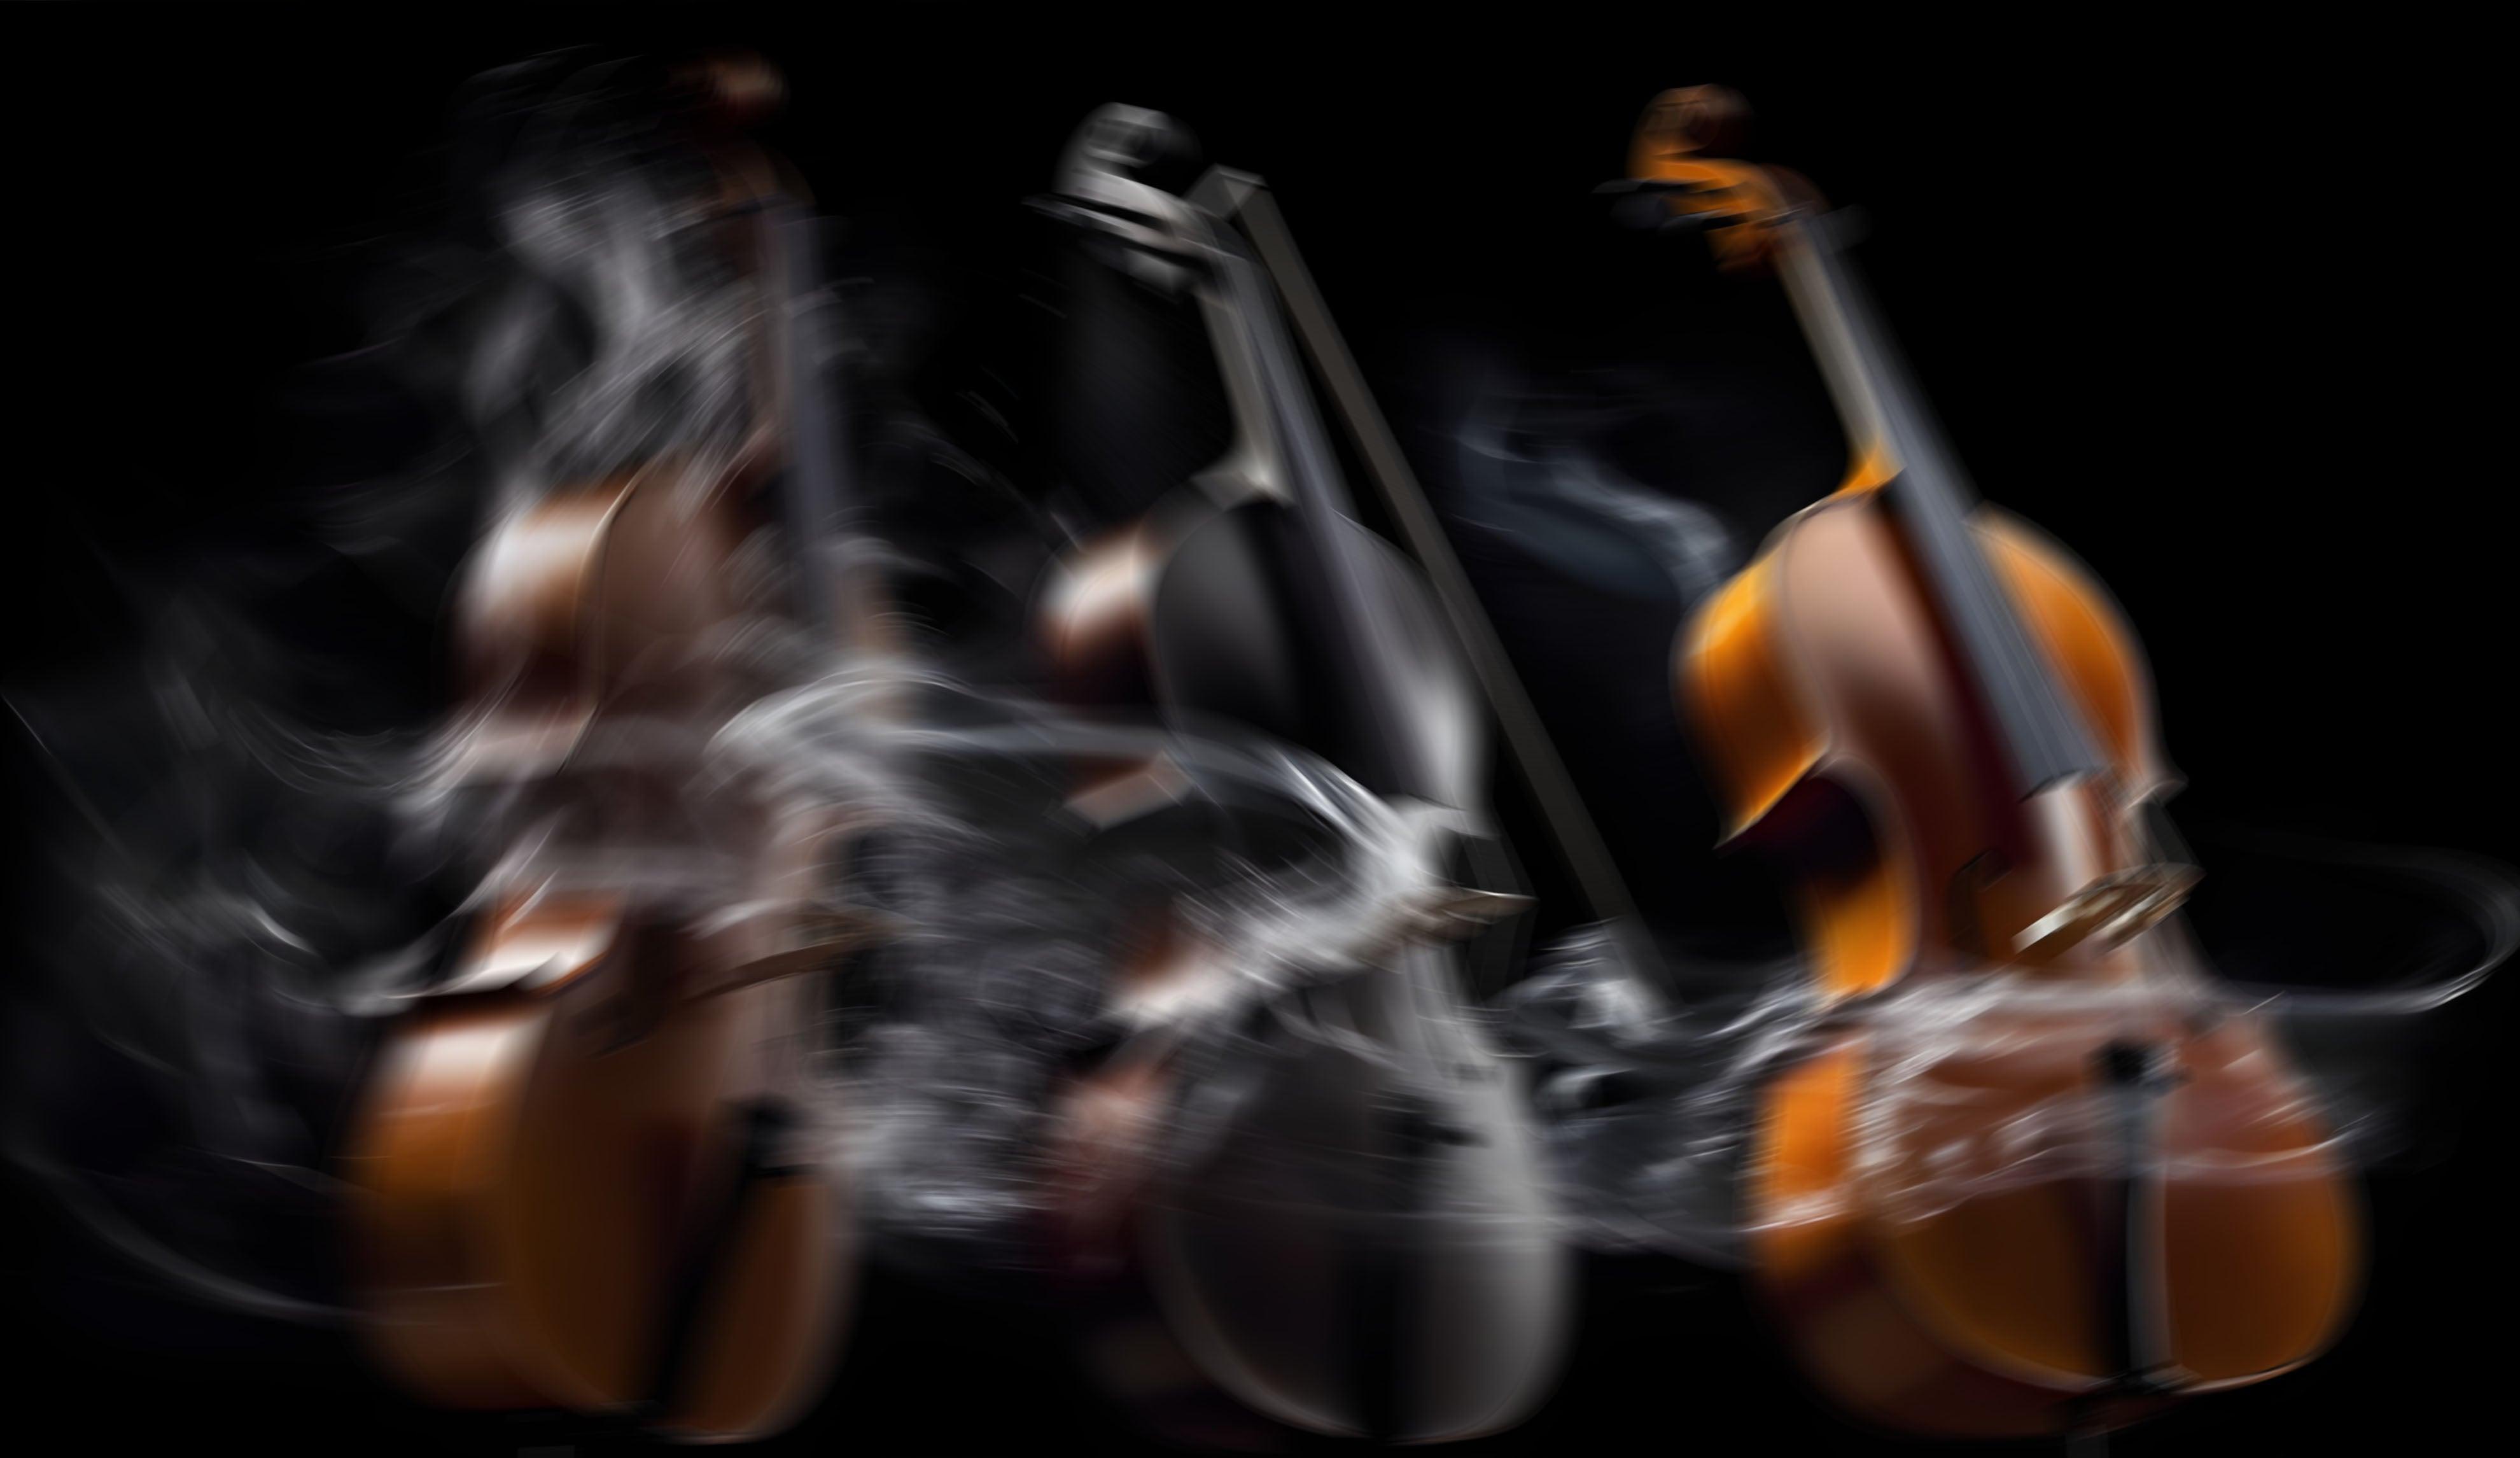 Violin Background Image 3960x2292